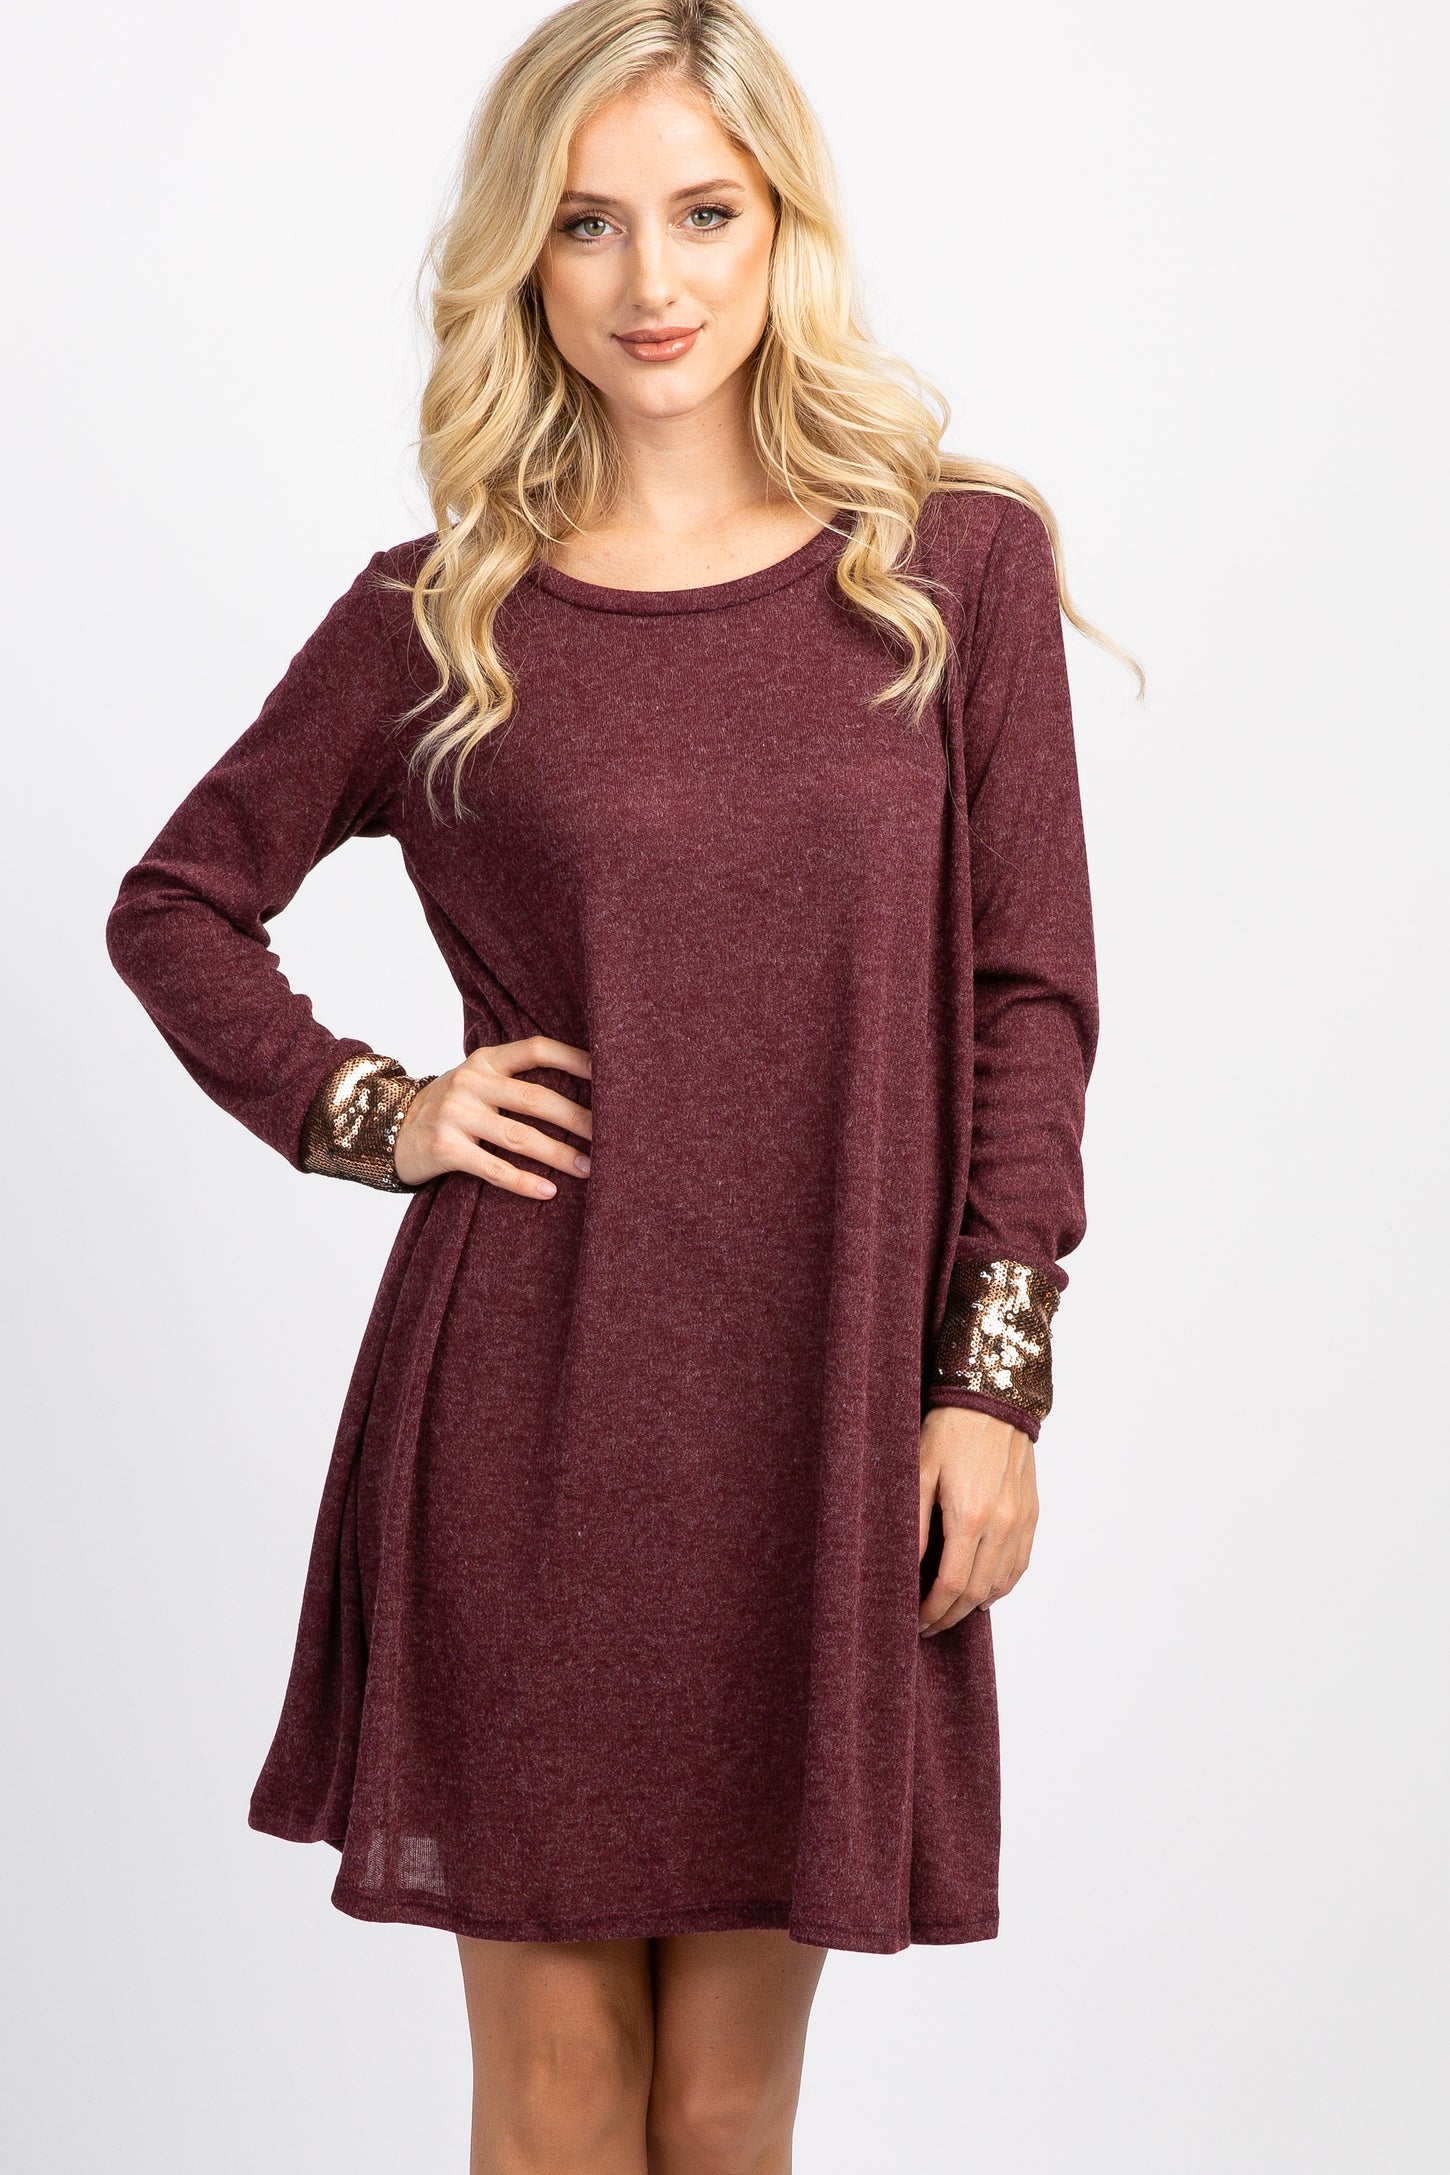 Burgundy Long Sleeve Sequin Dress